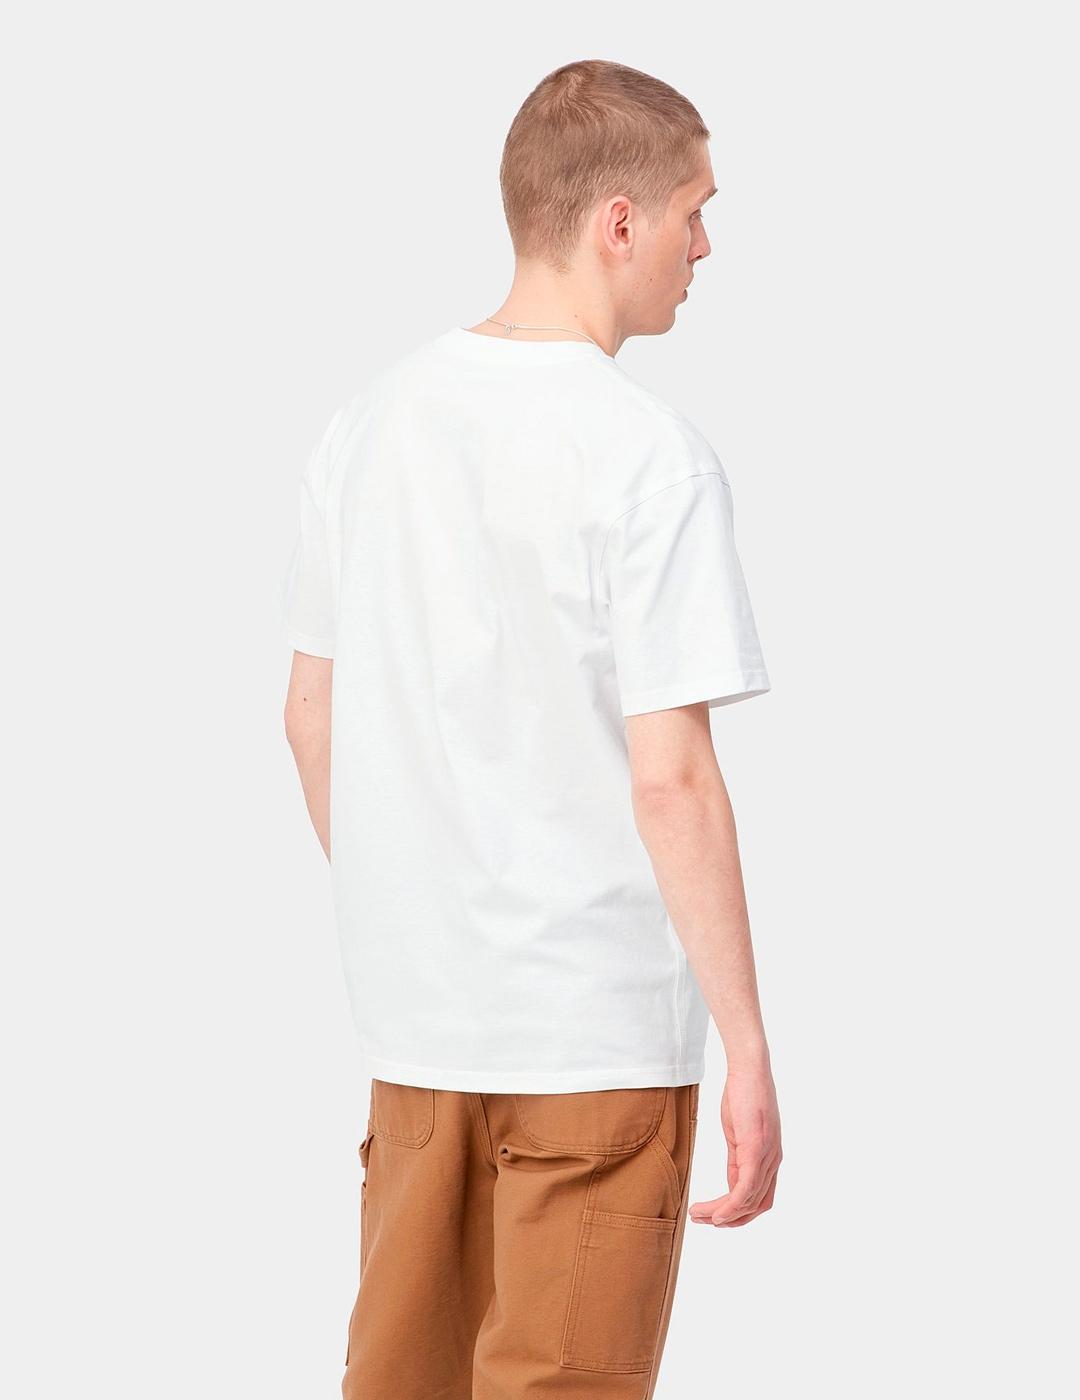 Camiseta CARHARTT AMERICAN SCRIPT - White